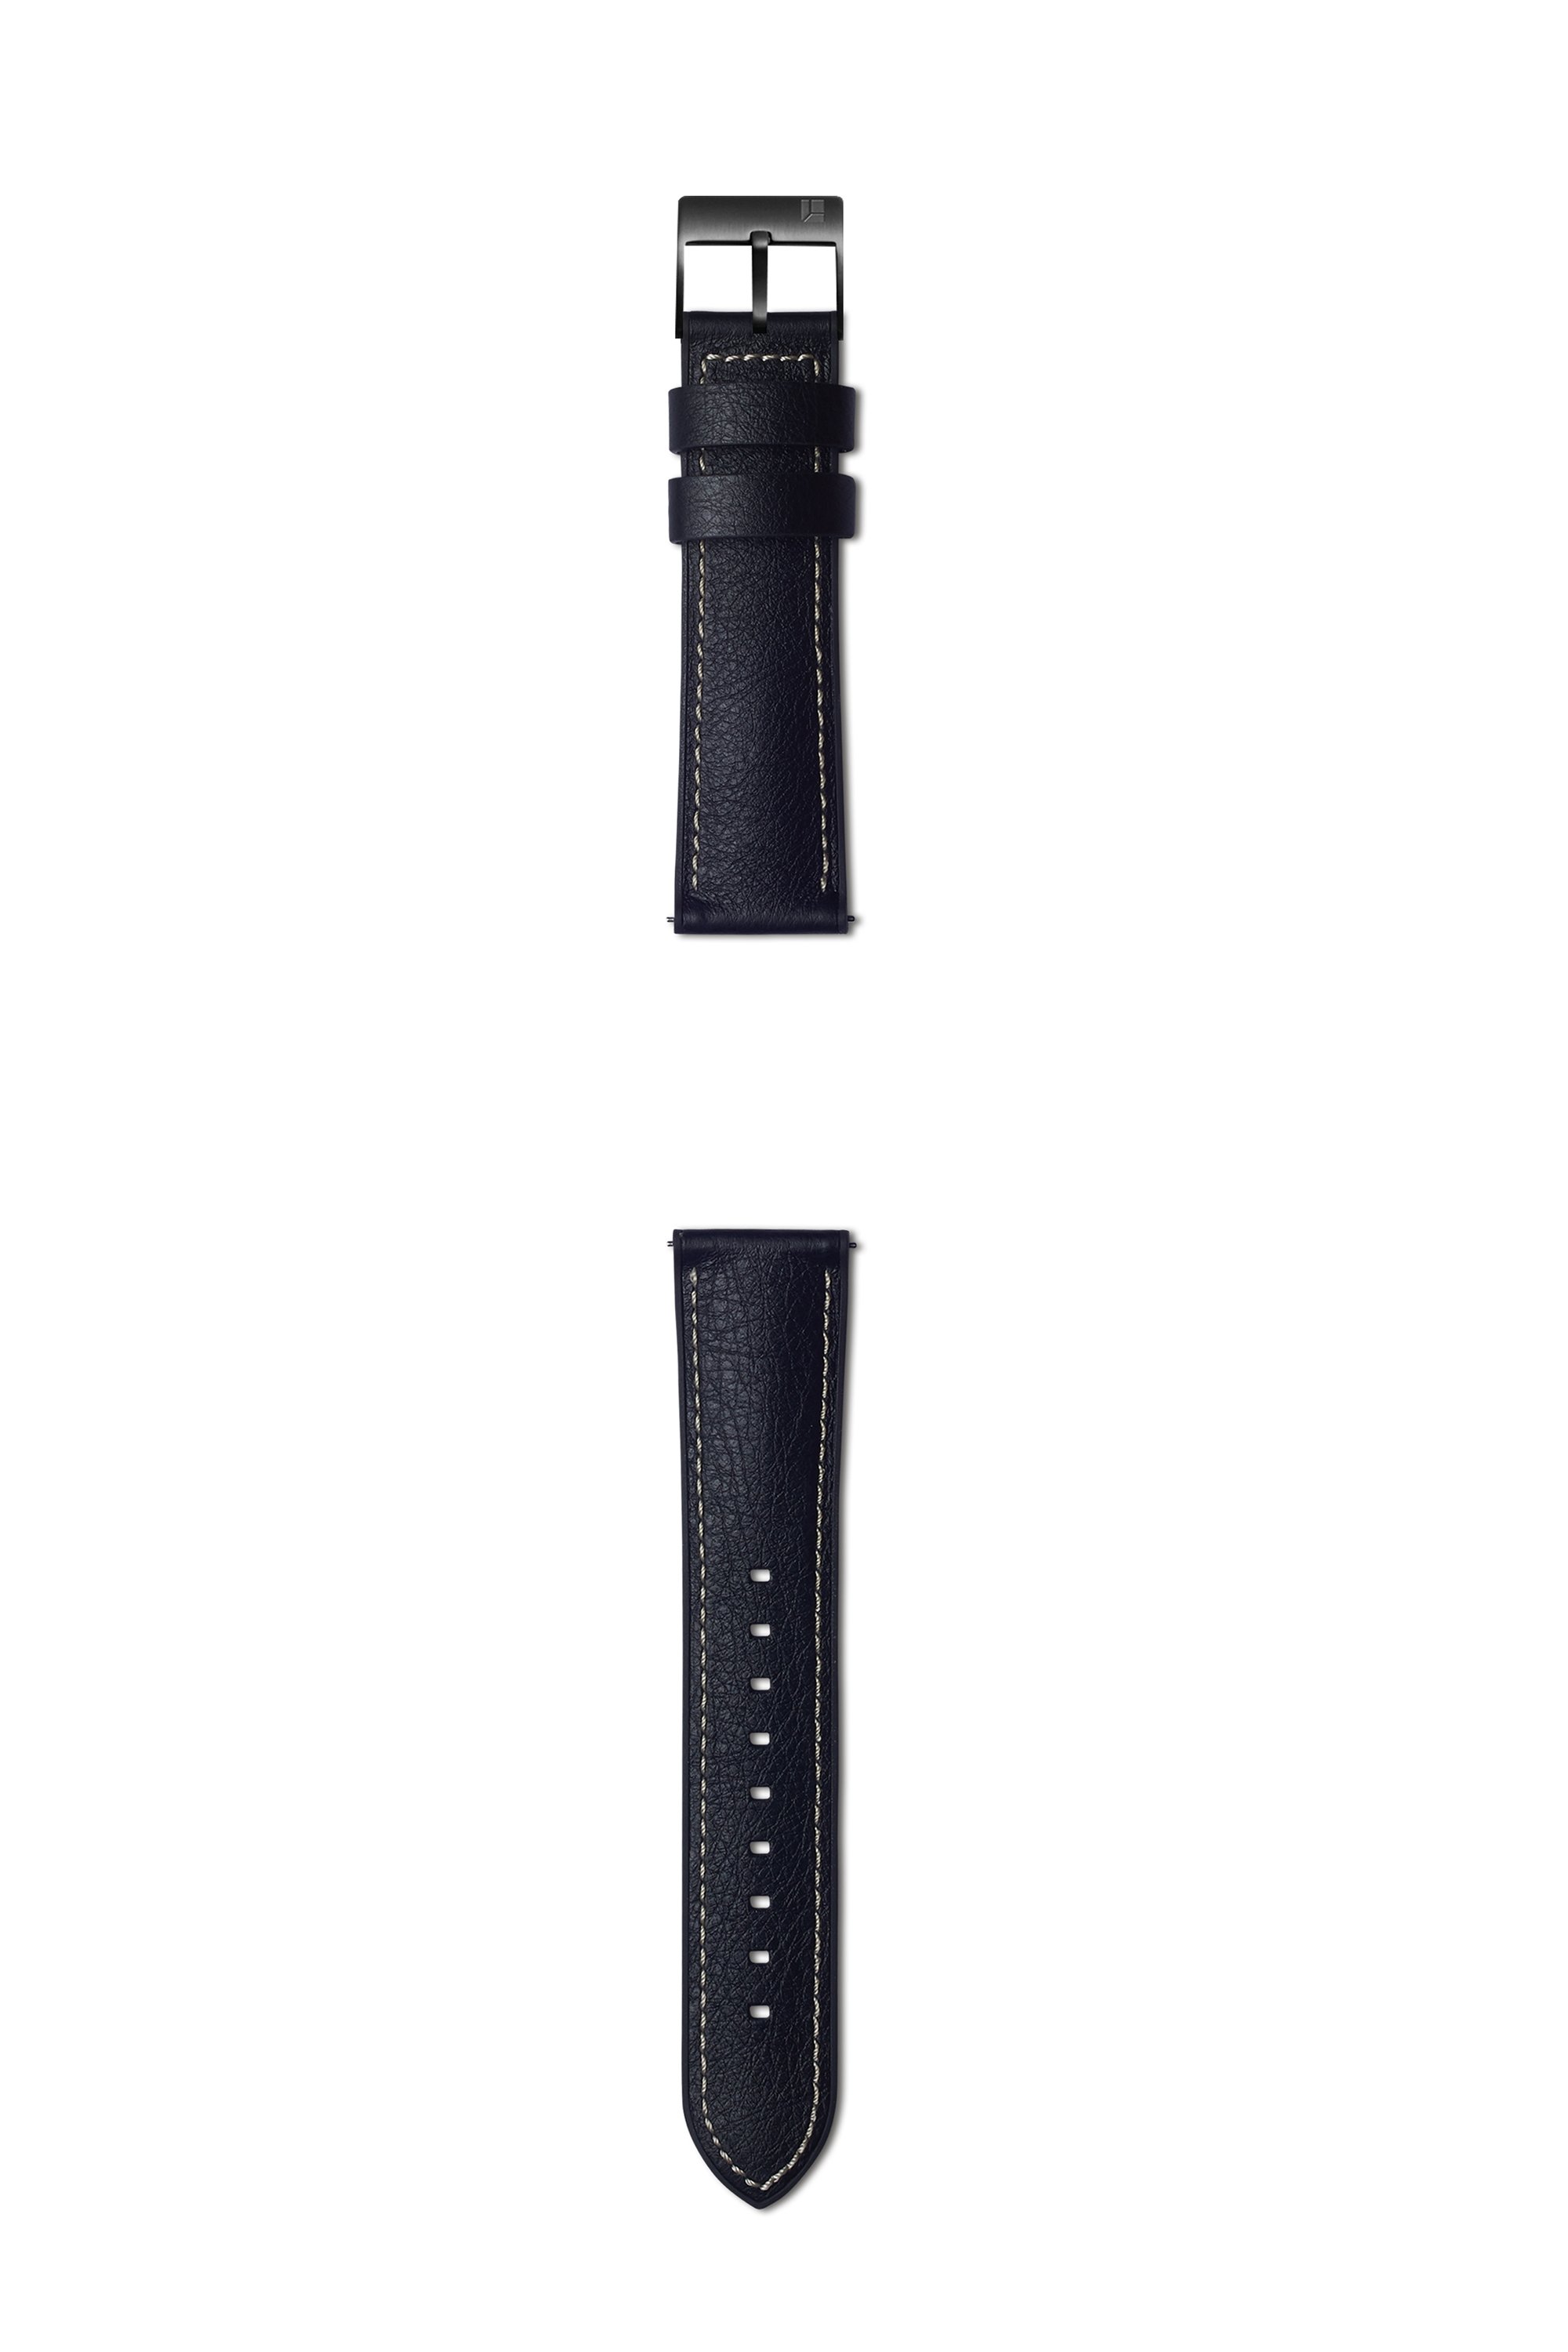 Samsung Pasek skórzany do smartwatcha Urban Traveller 20 mm czarny